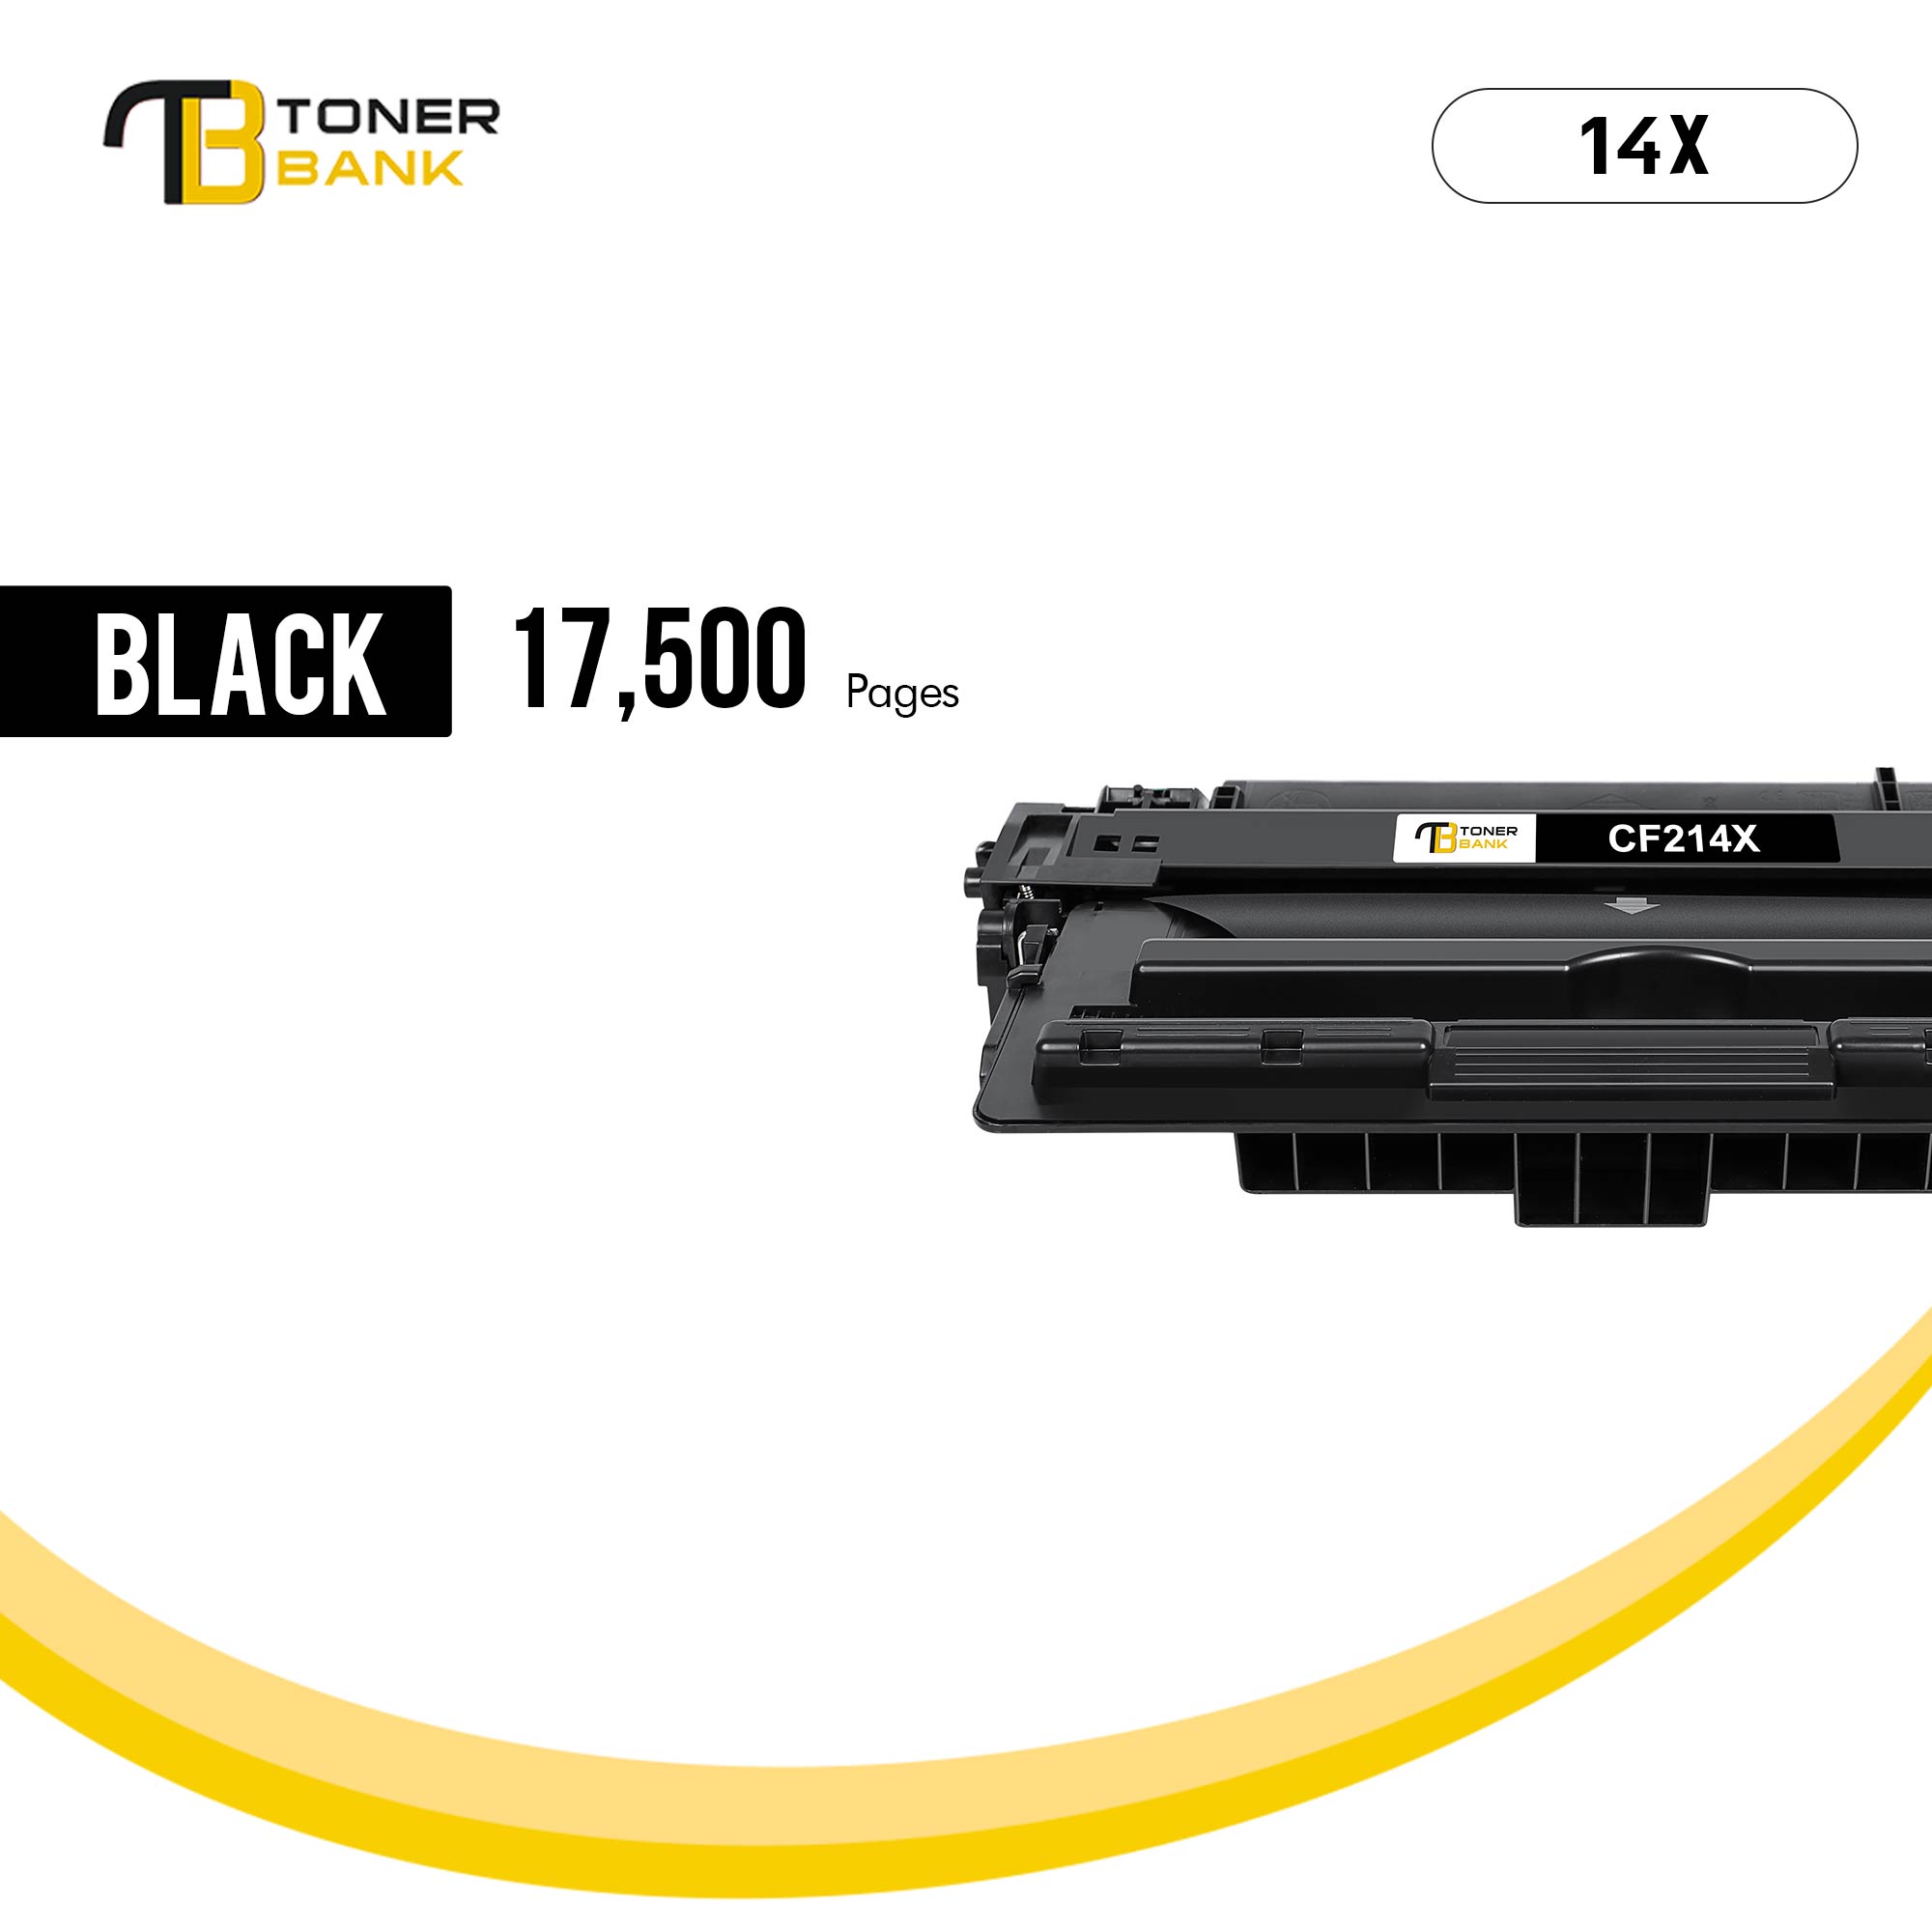 Toner Bank Compatible Toner for HP CF214X 14X HP LaserJet Enterprise MFP M725dn M725f M725z M725z M712n M712dn M712xh Printer Ink Black, 5-Pack - image 4 of 9